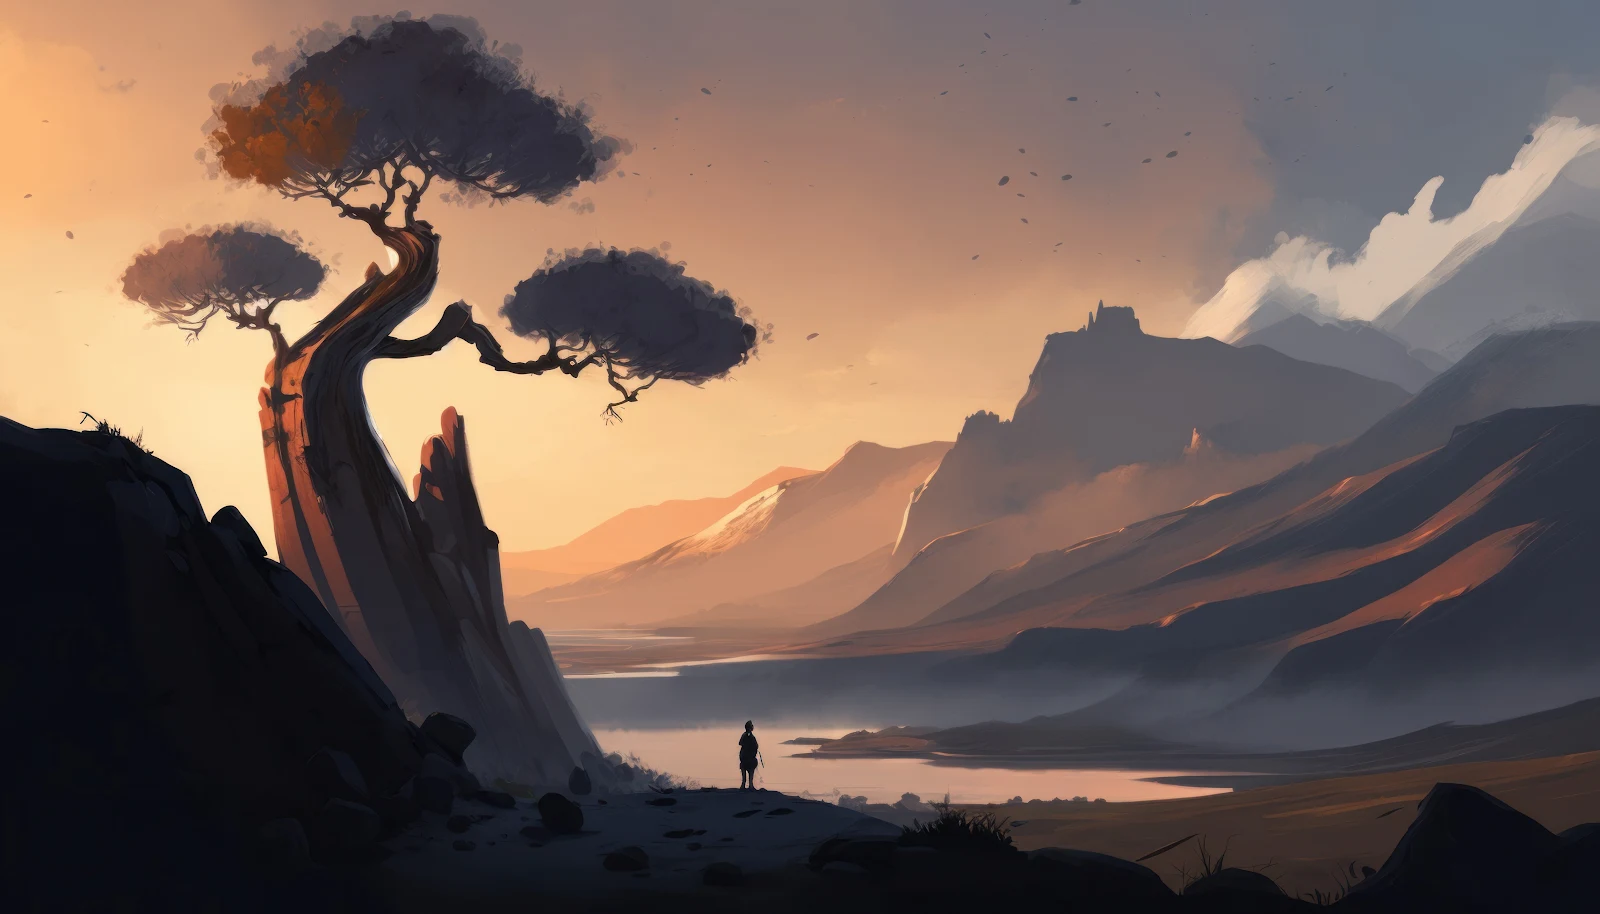 A Stunning Ai Art, Illustration, Landscape, Trees, Mountains 4K Desktop and Mobile Wallpaper Background (4579x2616)